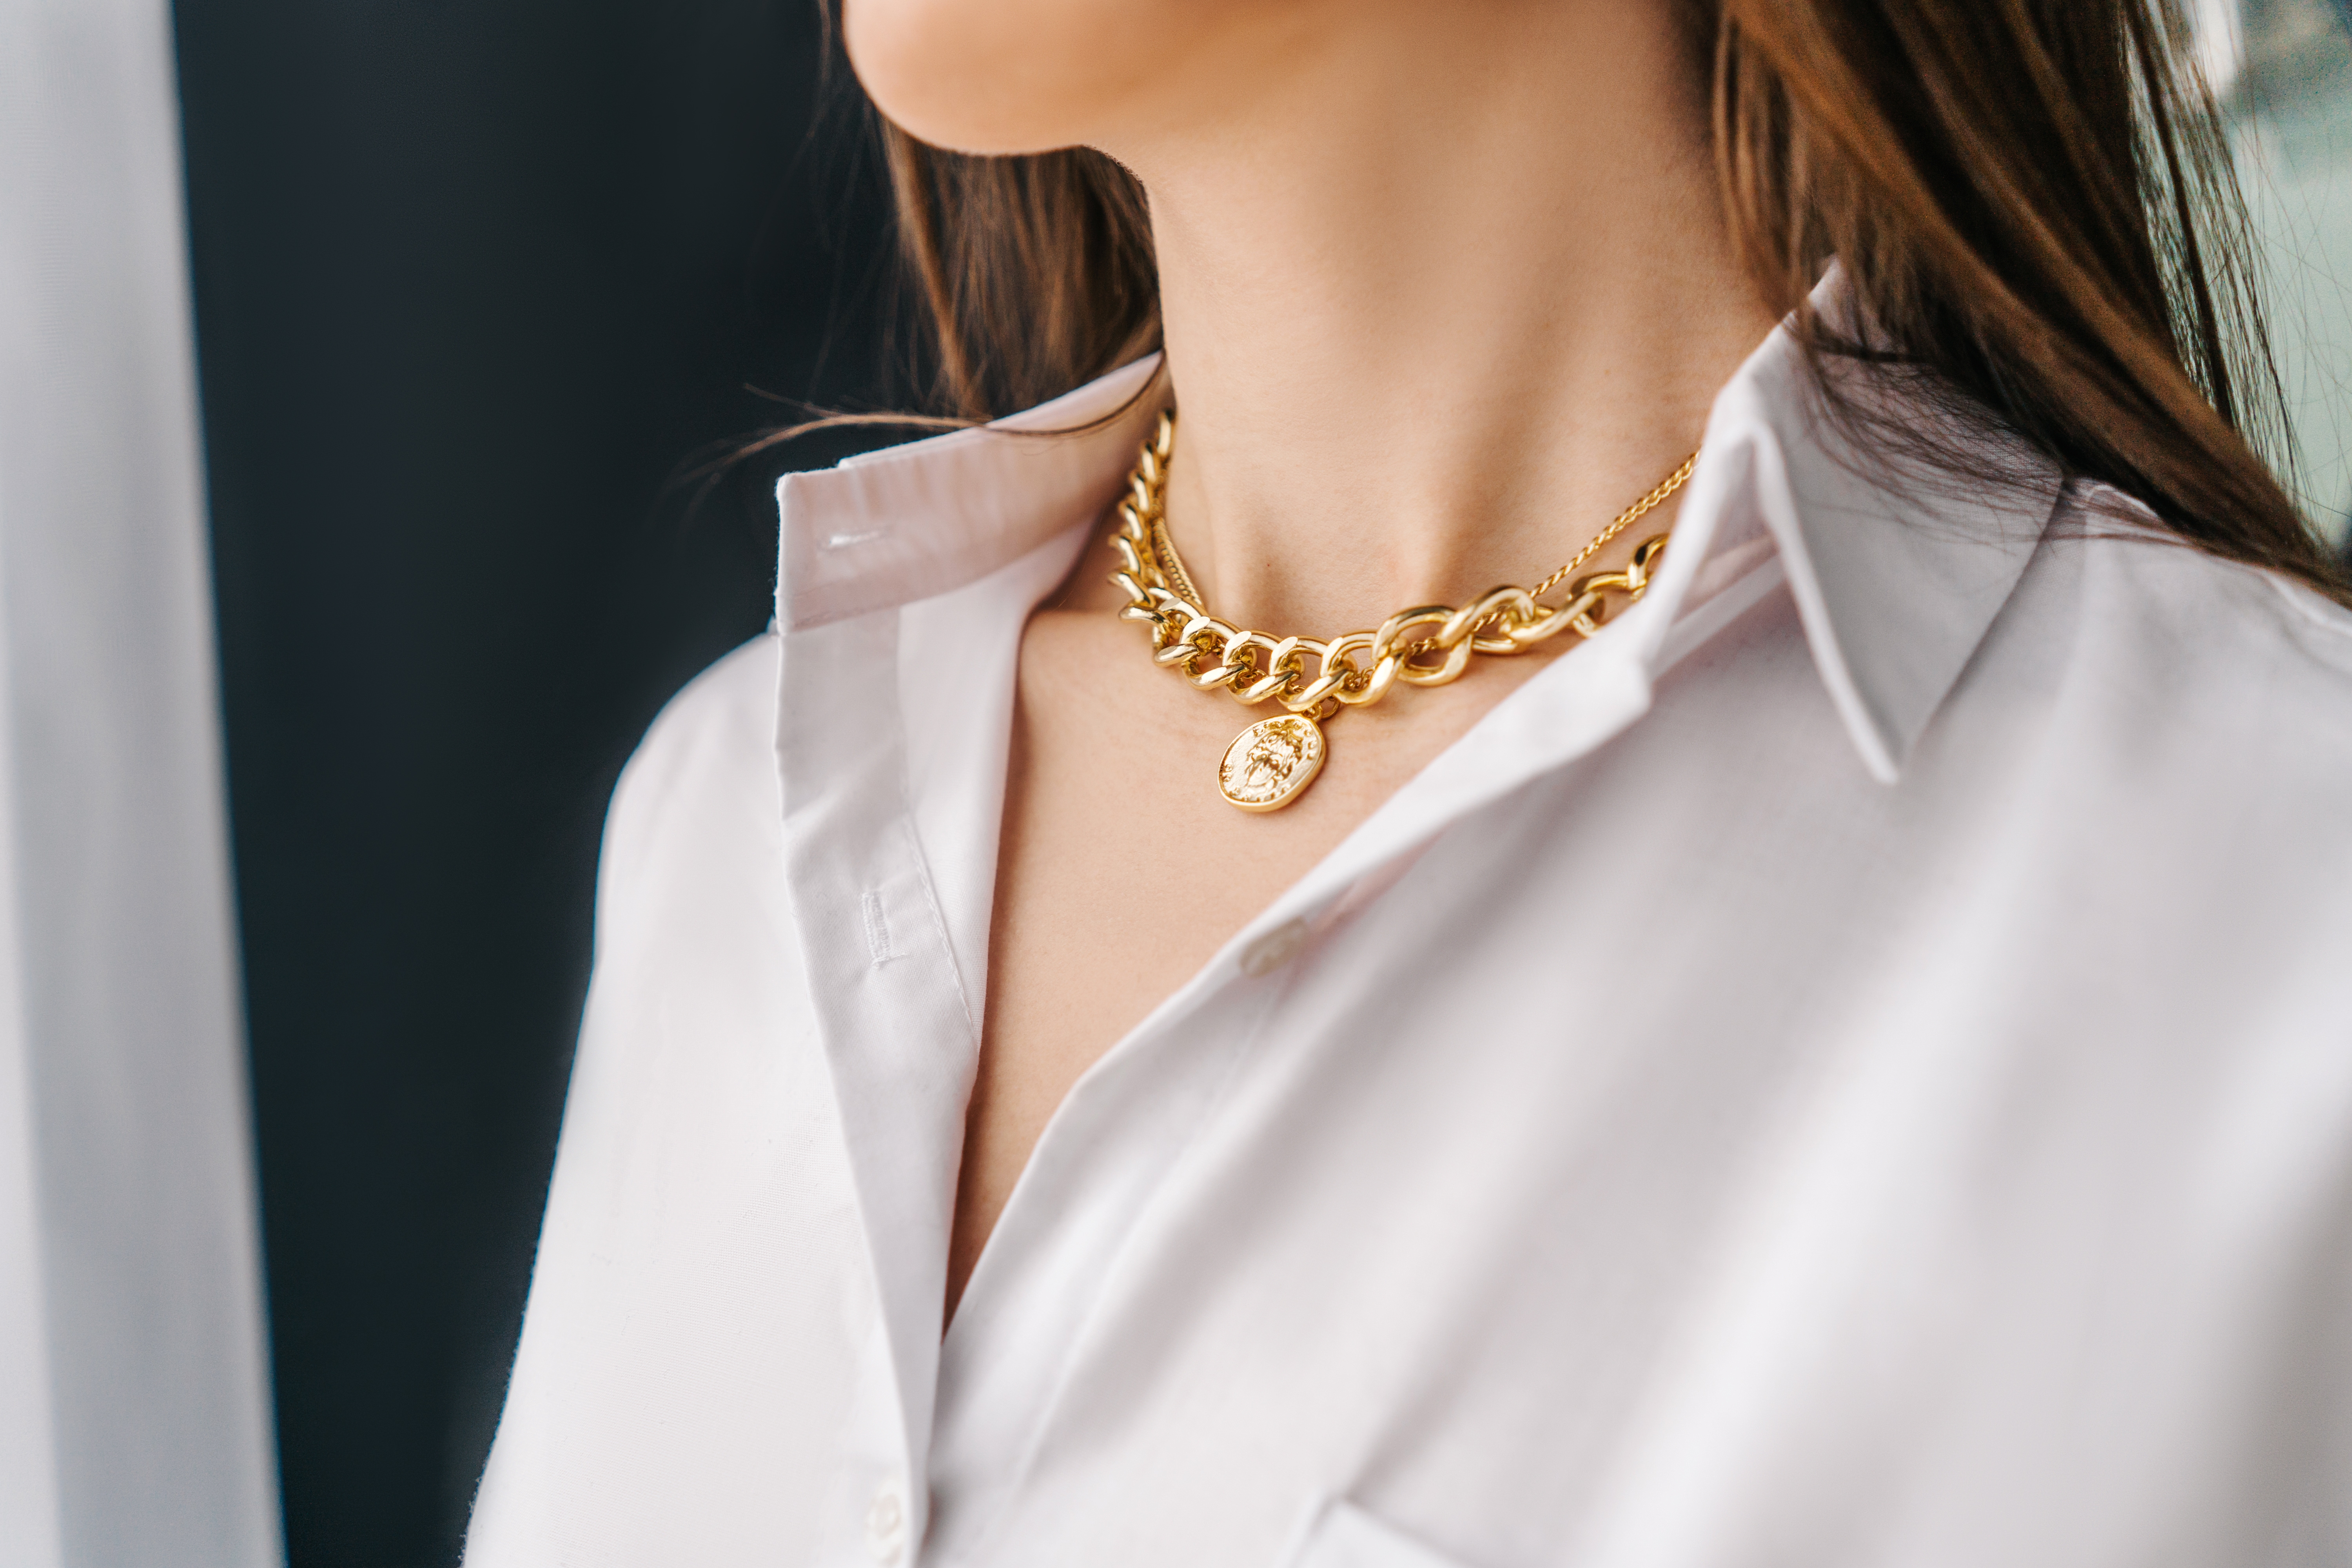 Woman wearing a necklace | Source: Shutterstock